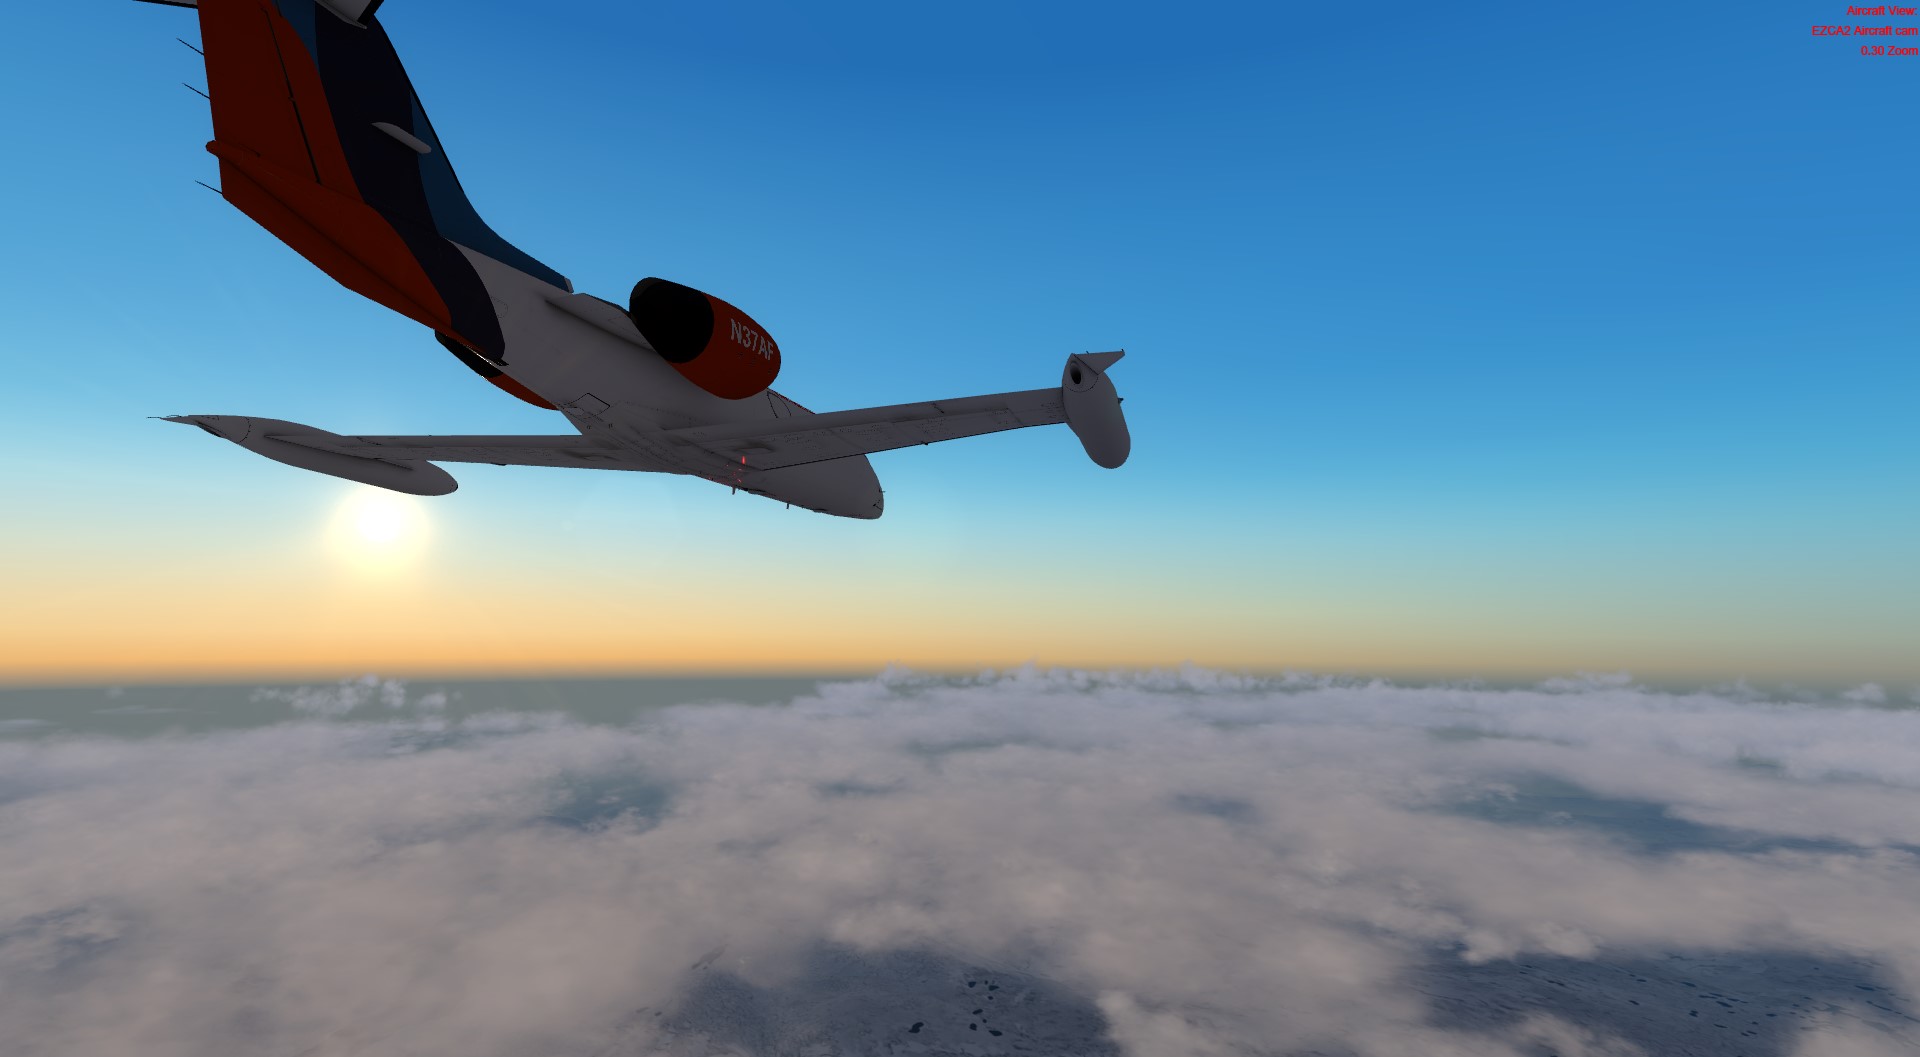 Flysimware – Learjet 35A 评测与冰岛送货之旅-4385 